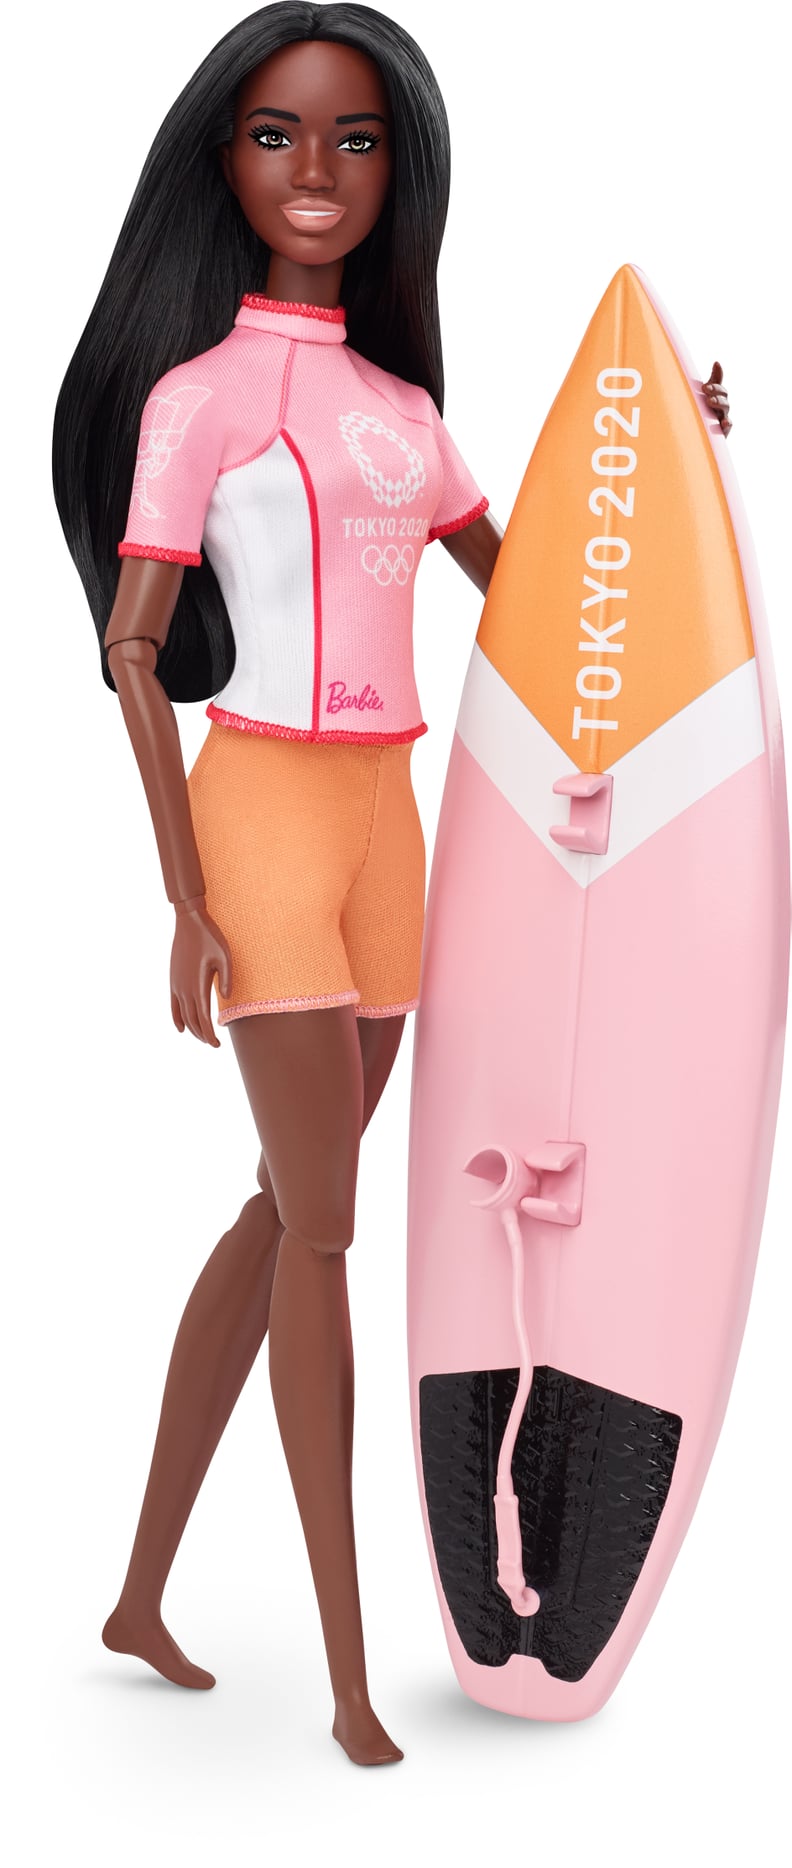 Summer Olympics 2020 Surfer Barbie